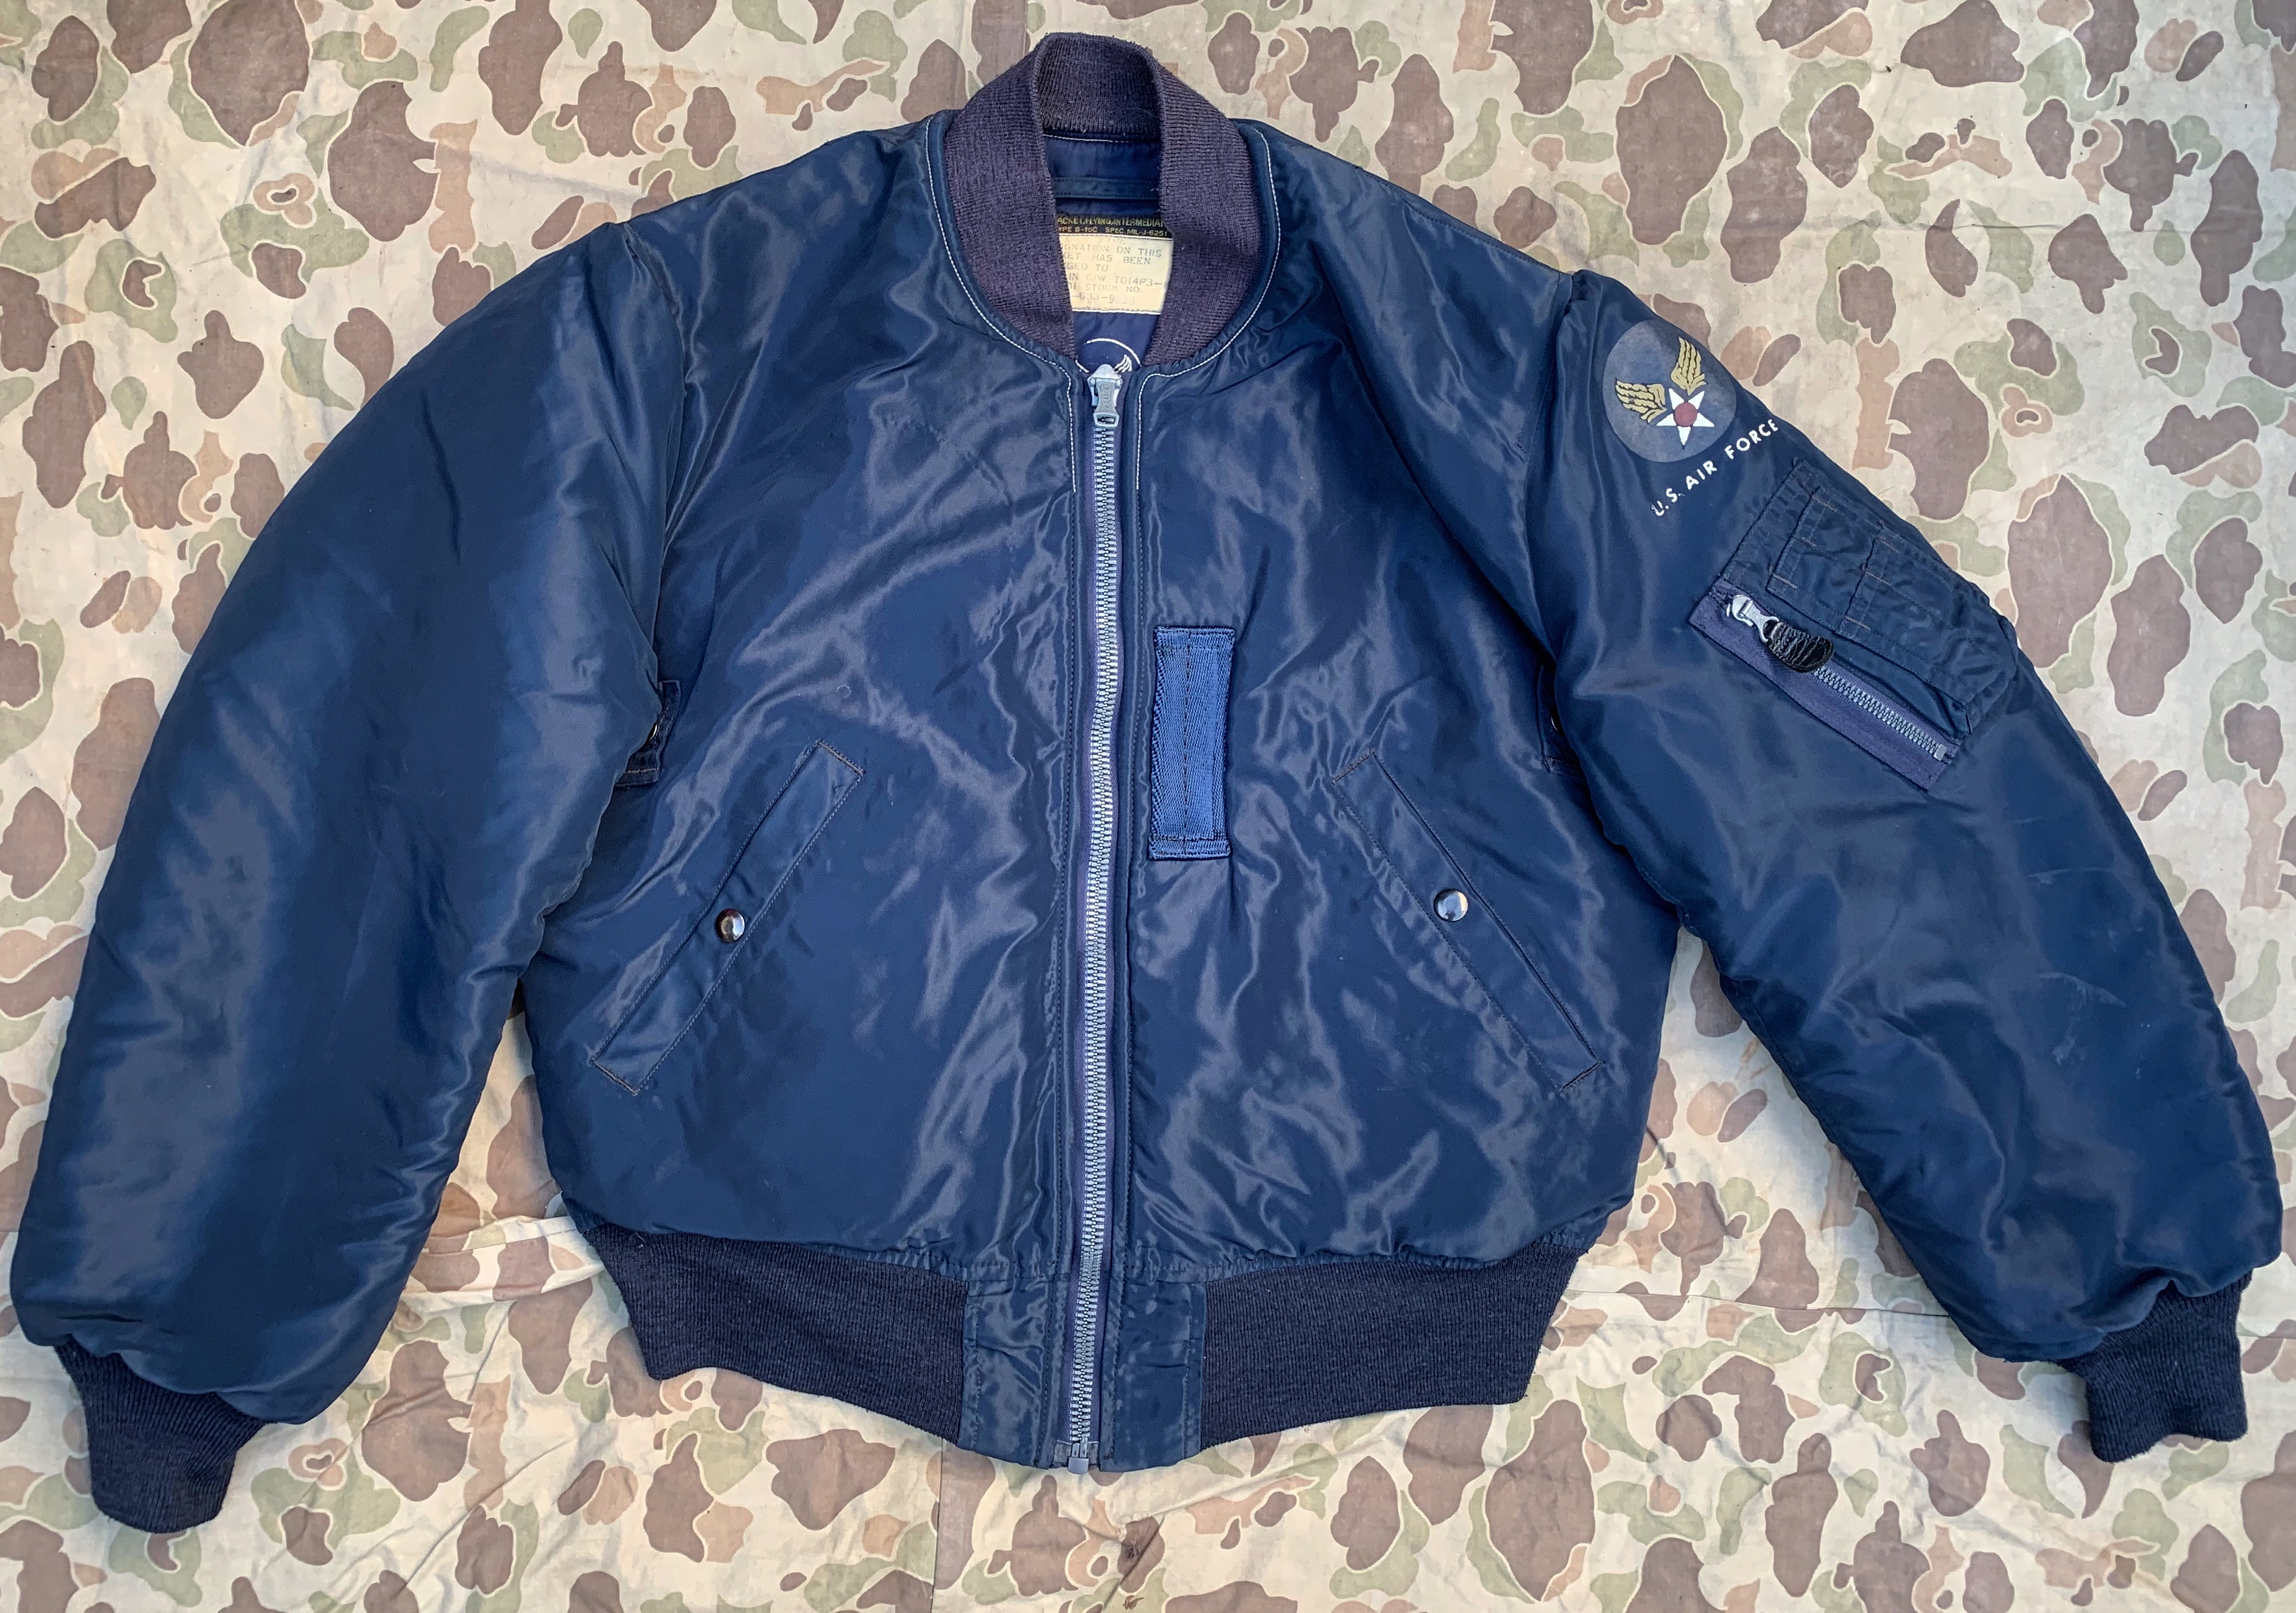 Original B-15 Jacket Collection | Vintage Leather Jackets Forum